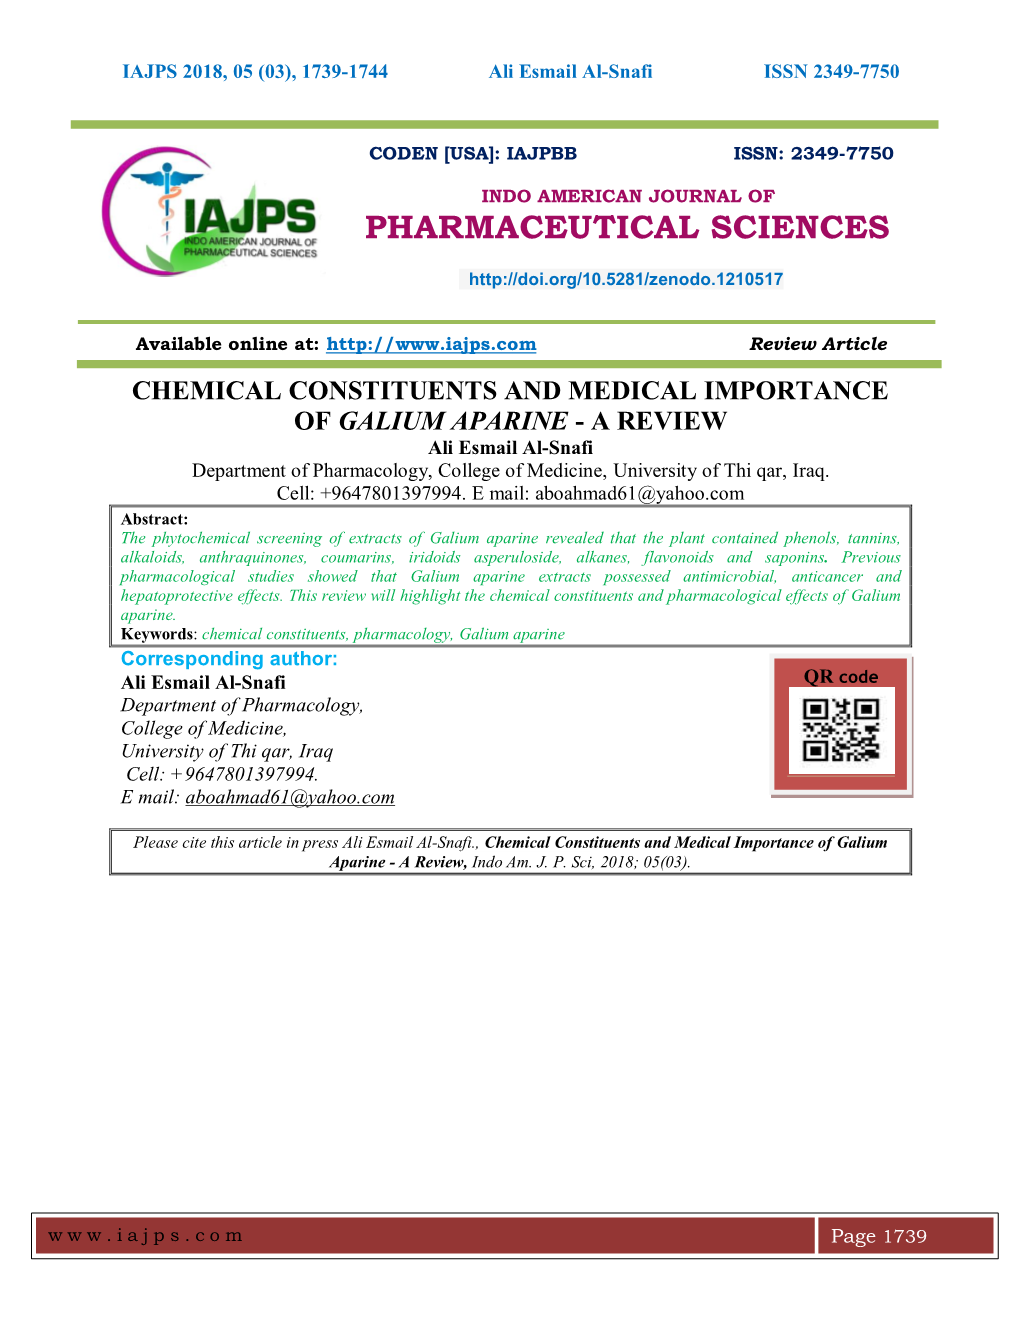 Chemical Constituents and Medical Importance of Galium Aparine